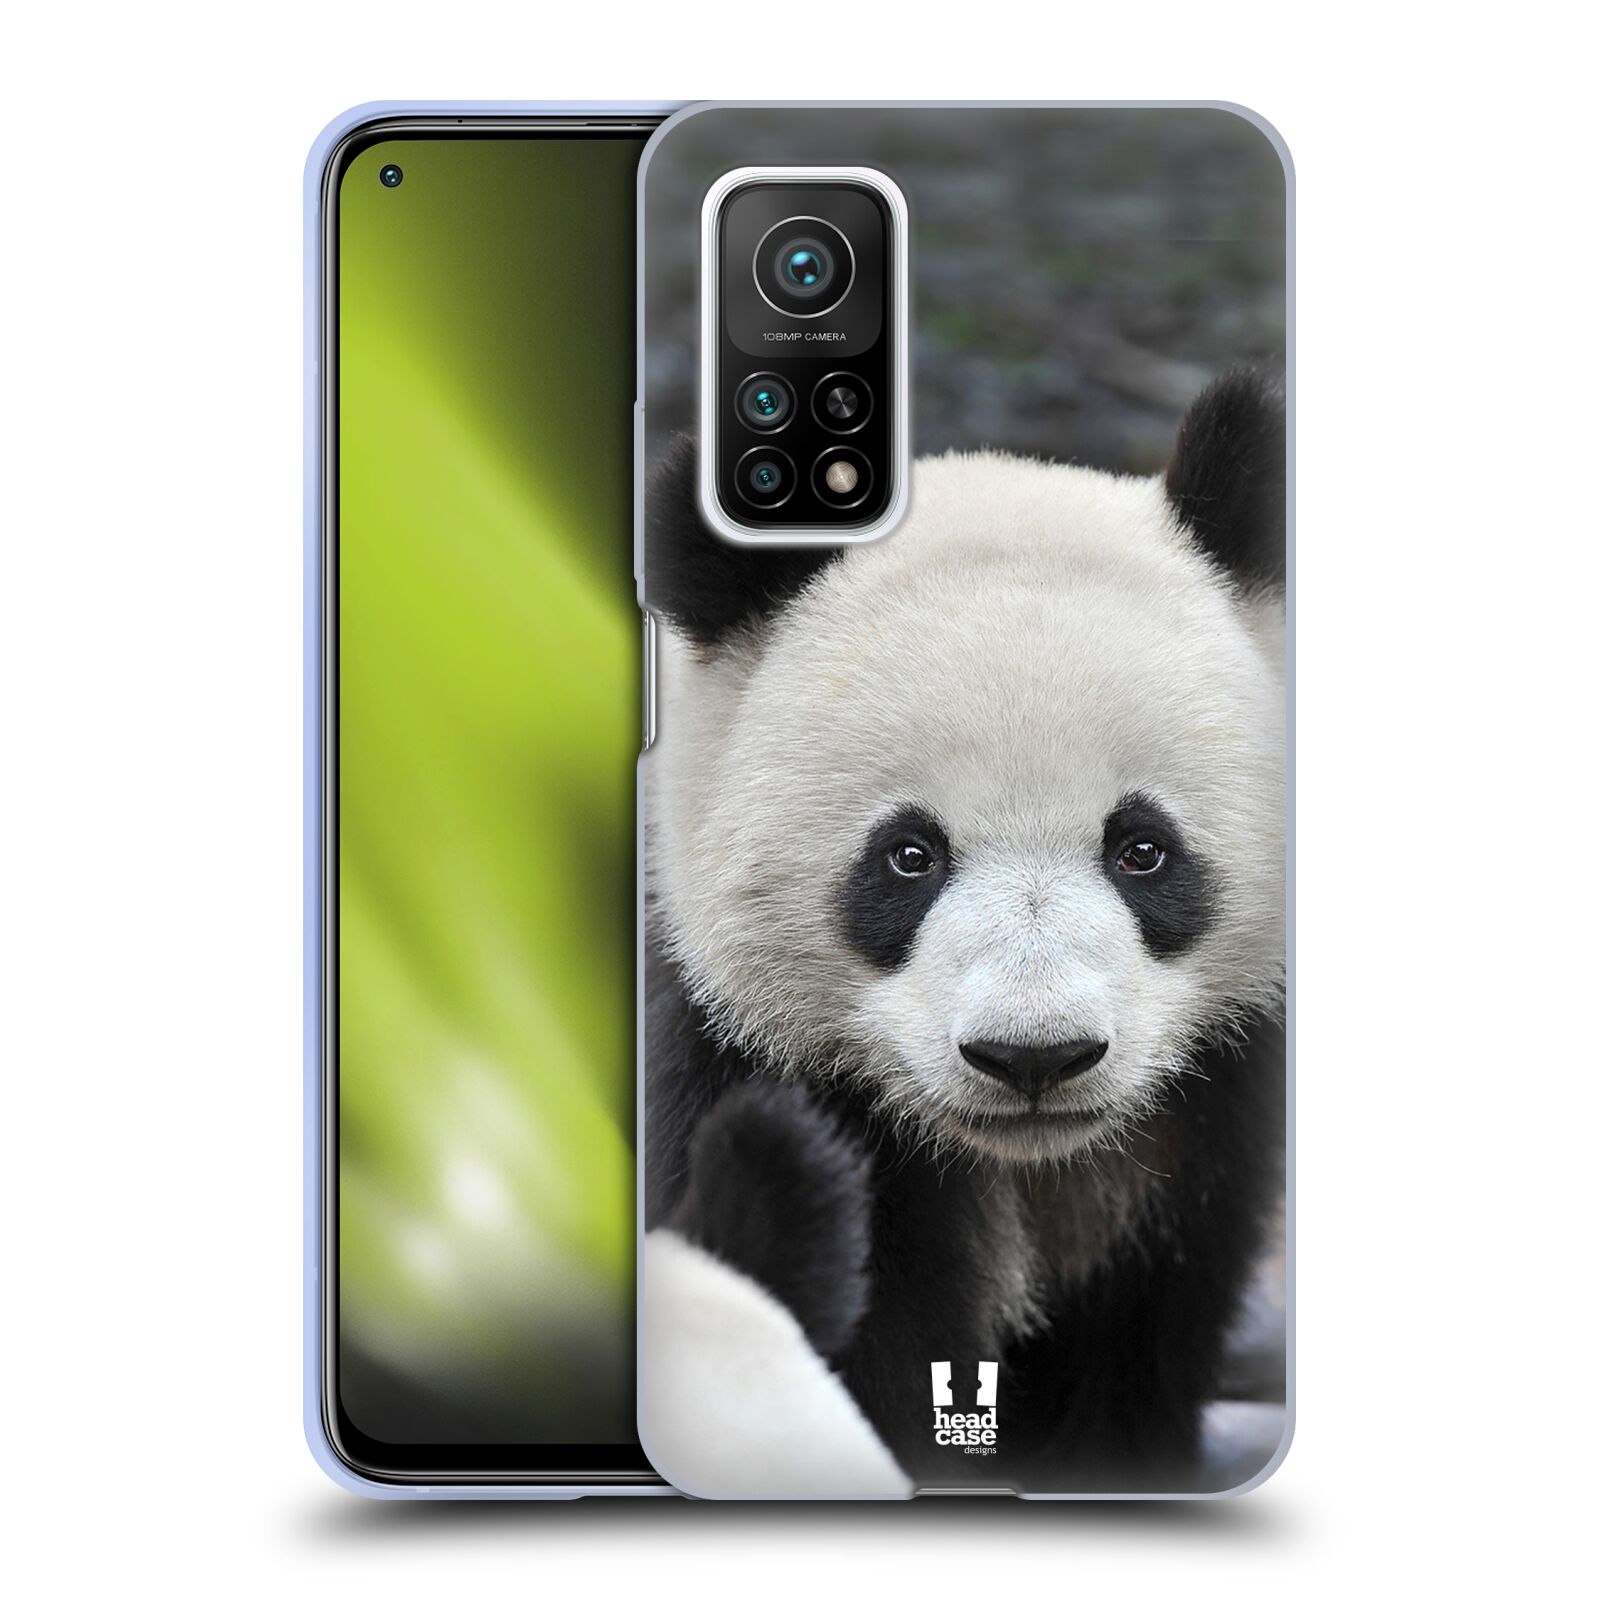 Plastový obal HEAD CASE na mobil Xiaomi Mi 10T a Mi 10T PRO vzor Divočina, Divoký život a zvířata foto MEDVĚD PANDA